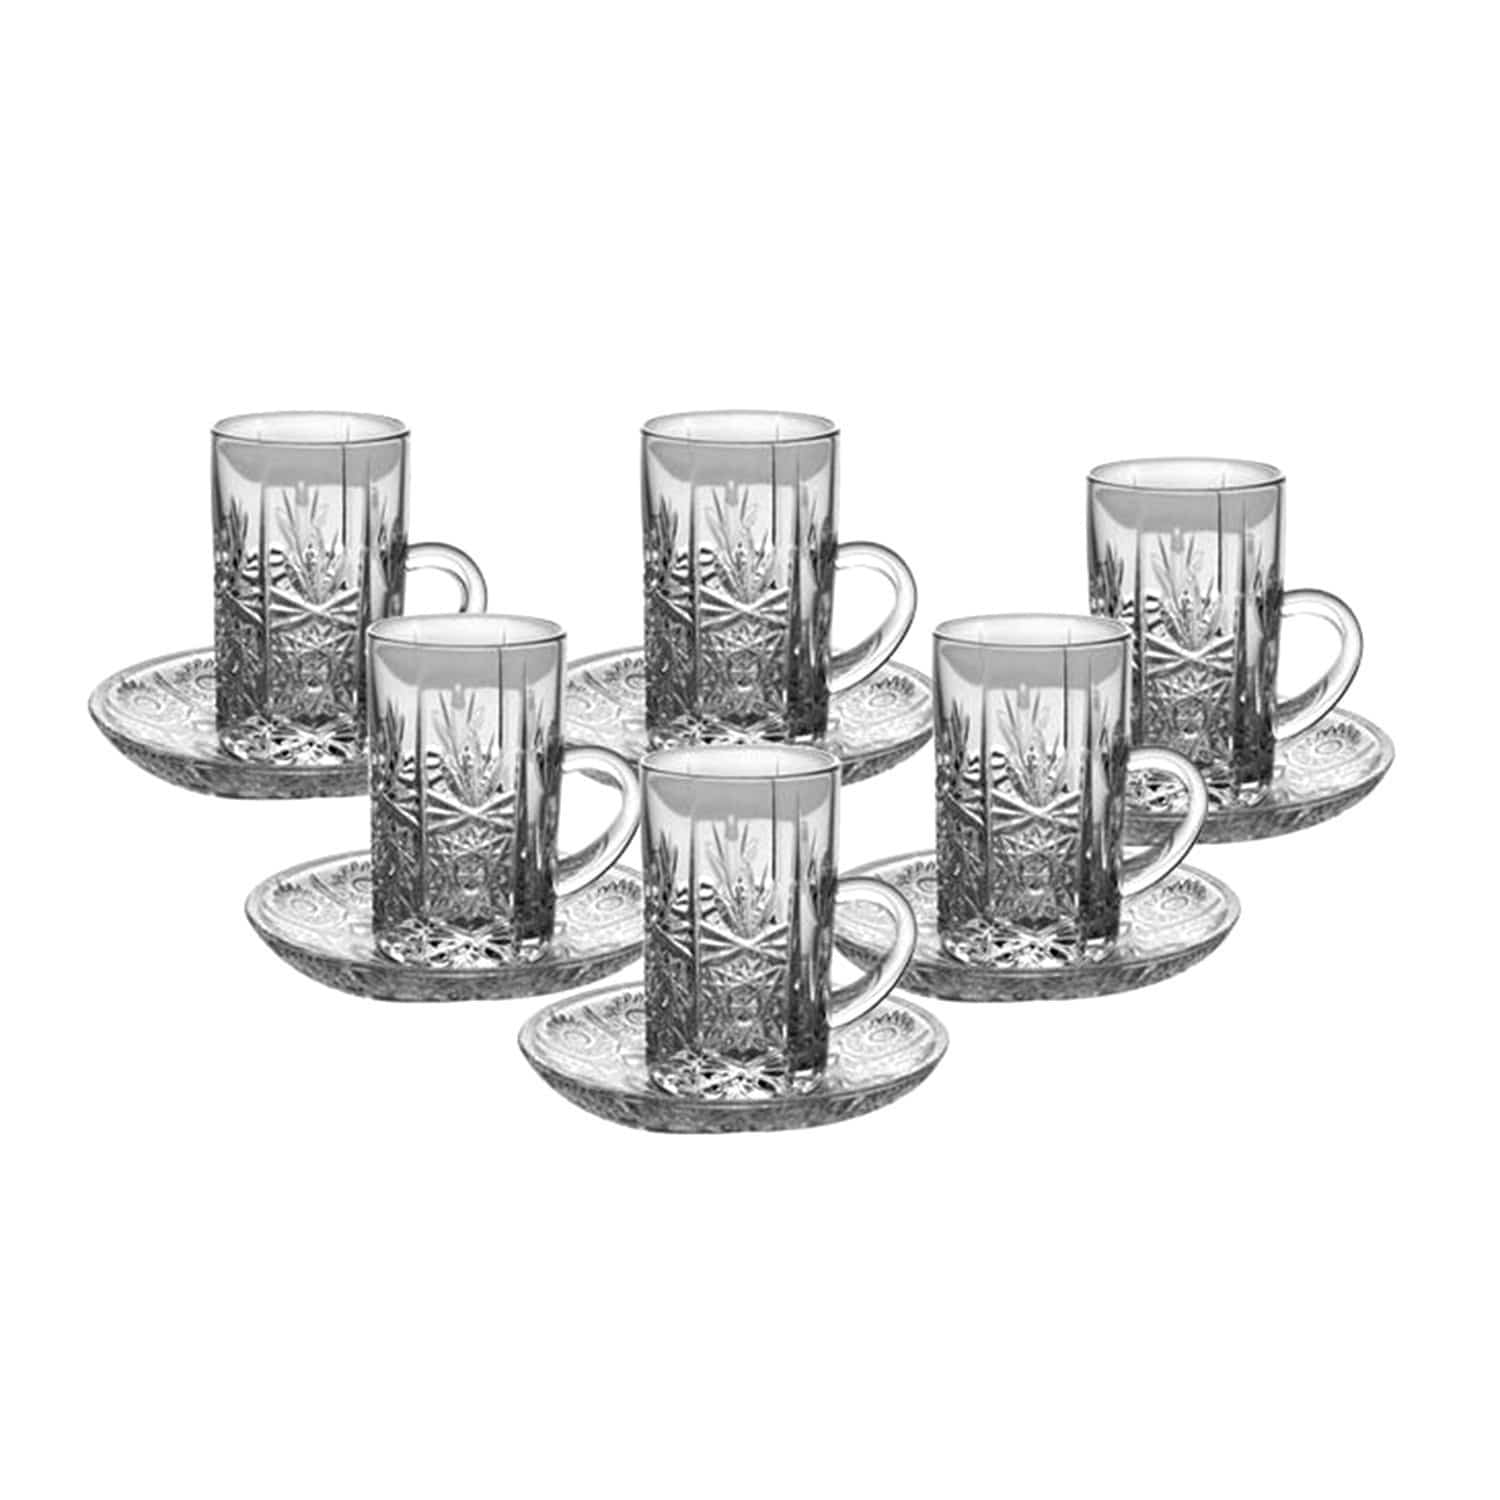 Bohemia Crystal Glass Yasmin Hand Cut Cup and Saucer Set - Clear, 57001_437 - 5385838 - Jashanmal Home